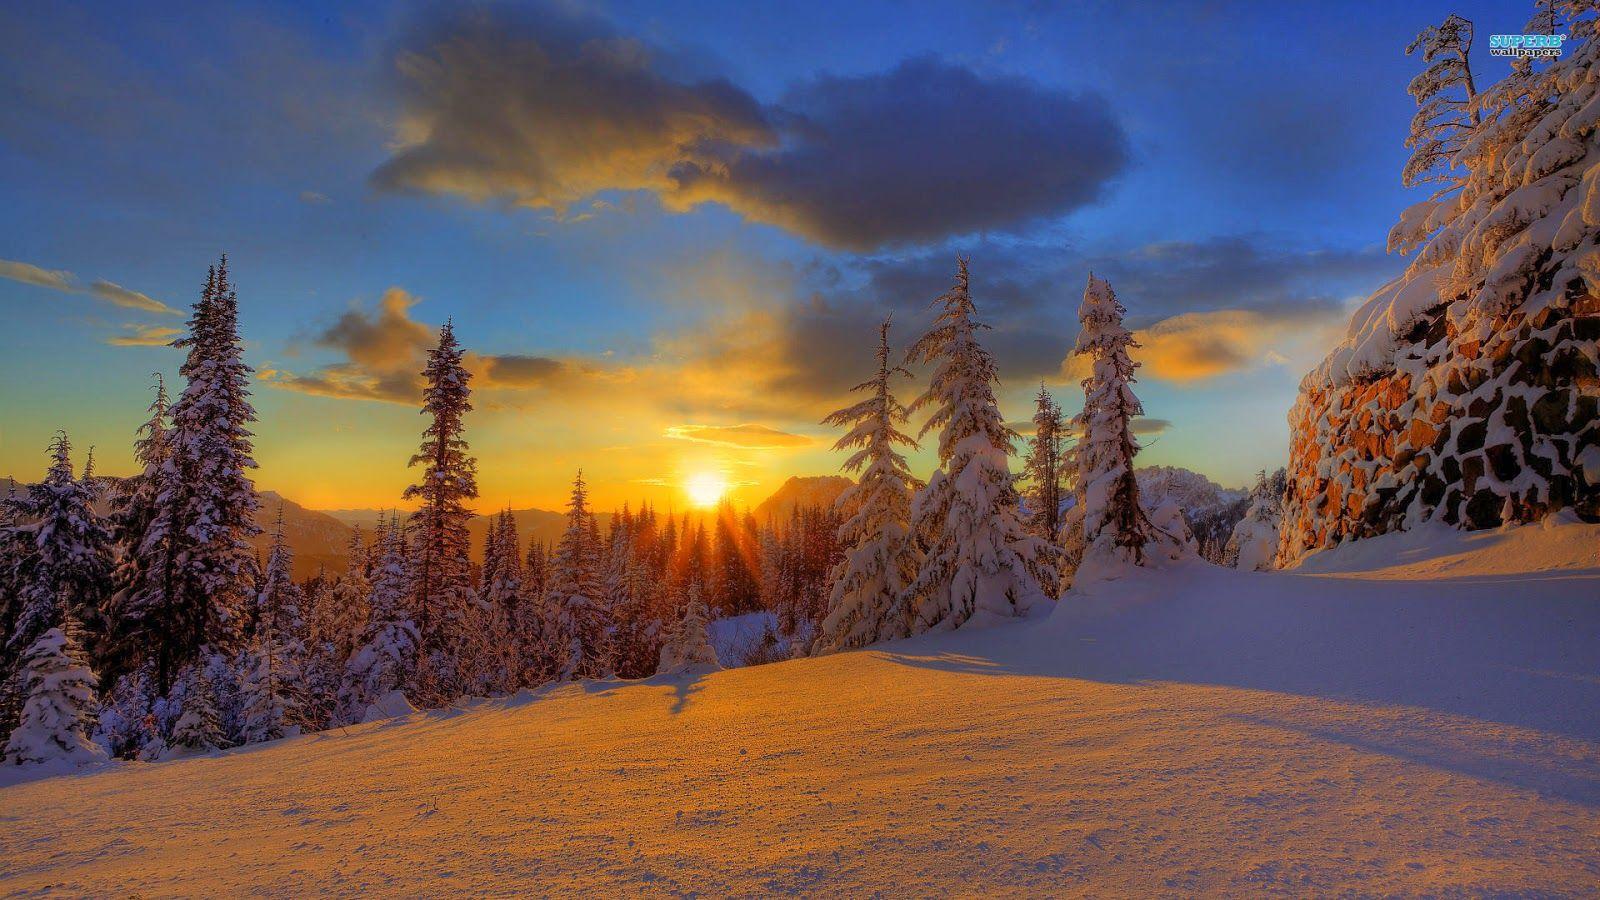 Beautiful Nature Image And Wallpaper: Snow Mountain Sunset